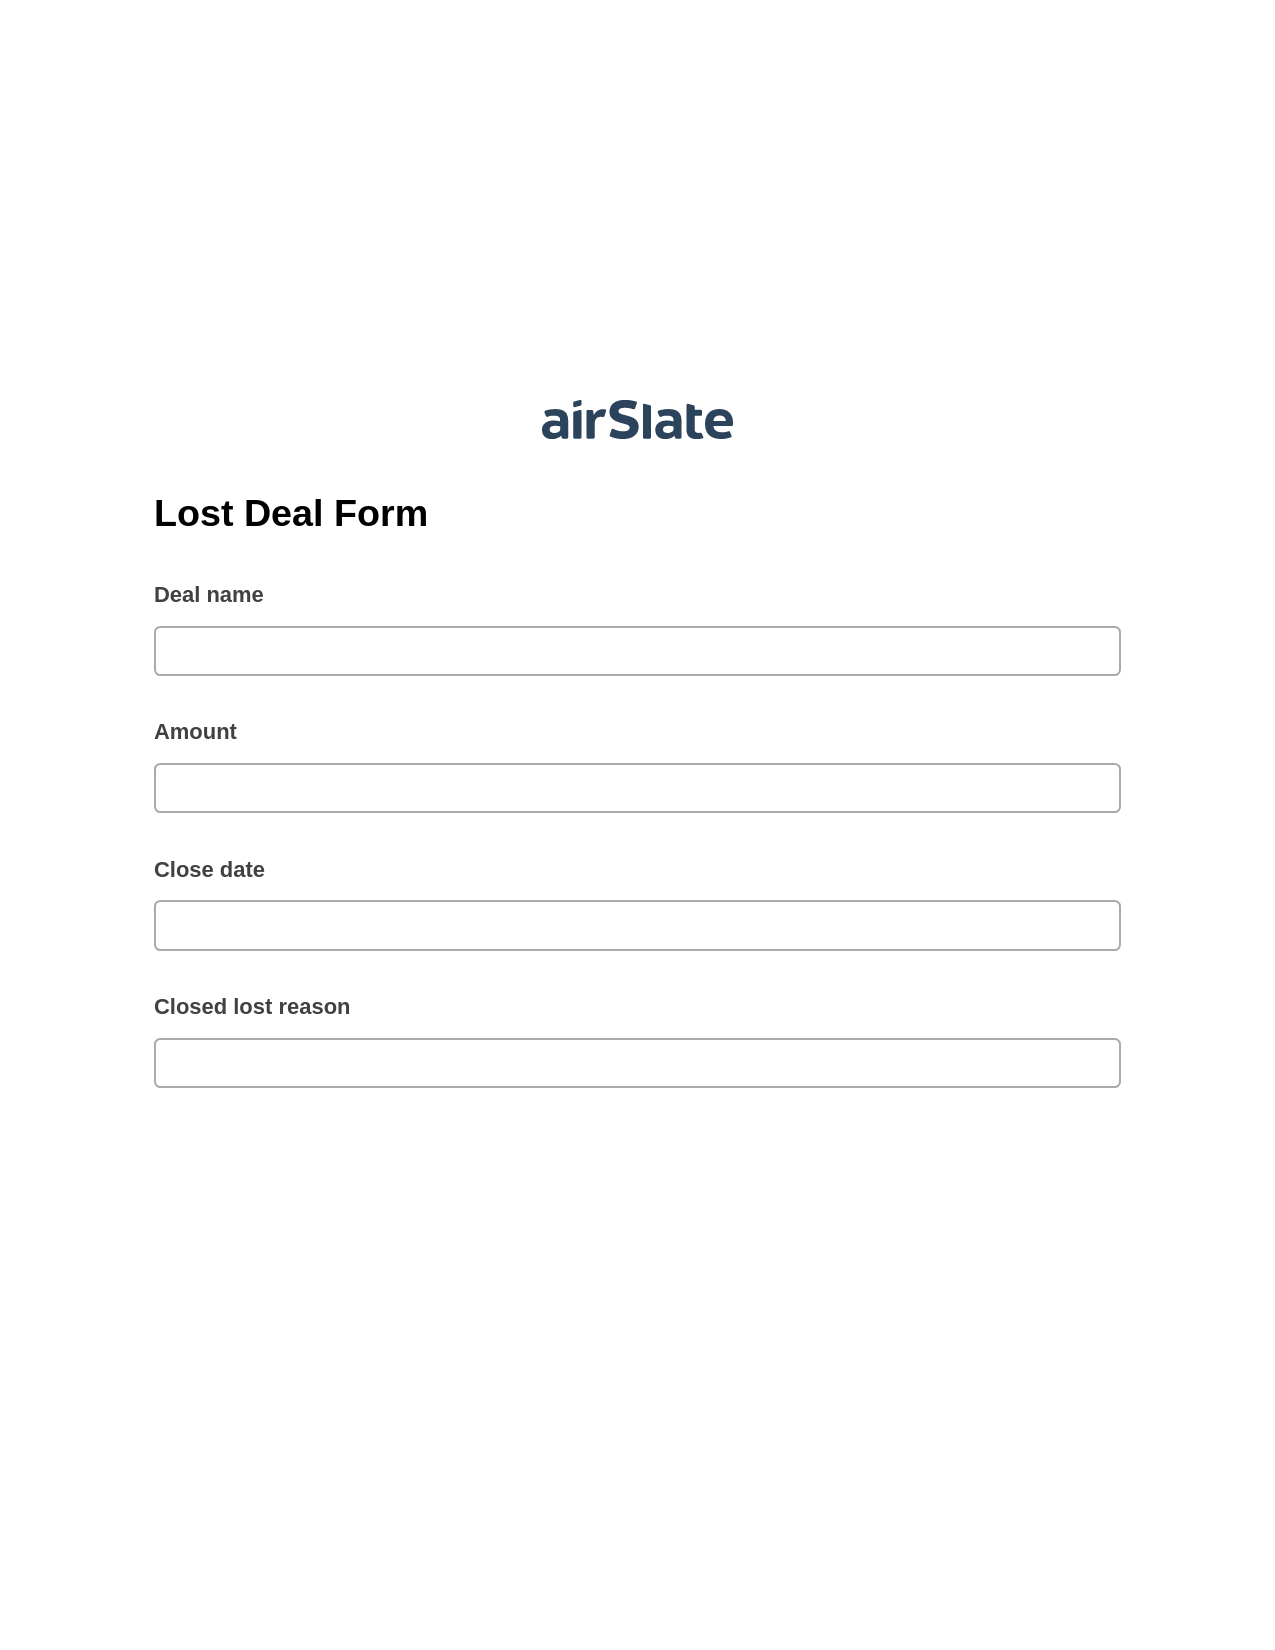 Lost Deal Form Pre-fill from Google Sheets Bot, Webhook Bot, Slack Notification Postfinish Bot